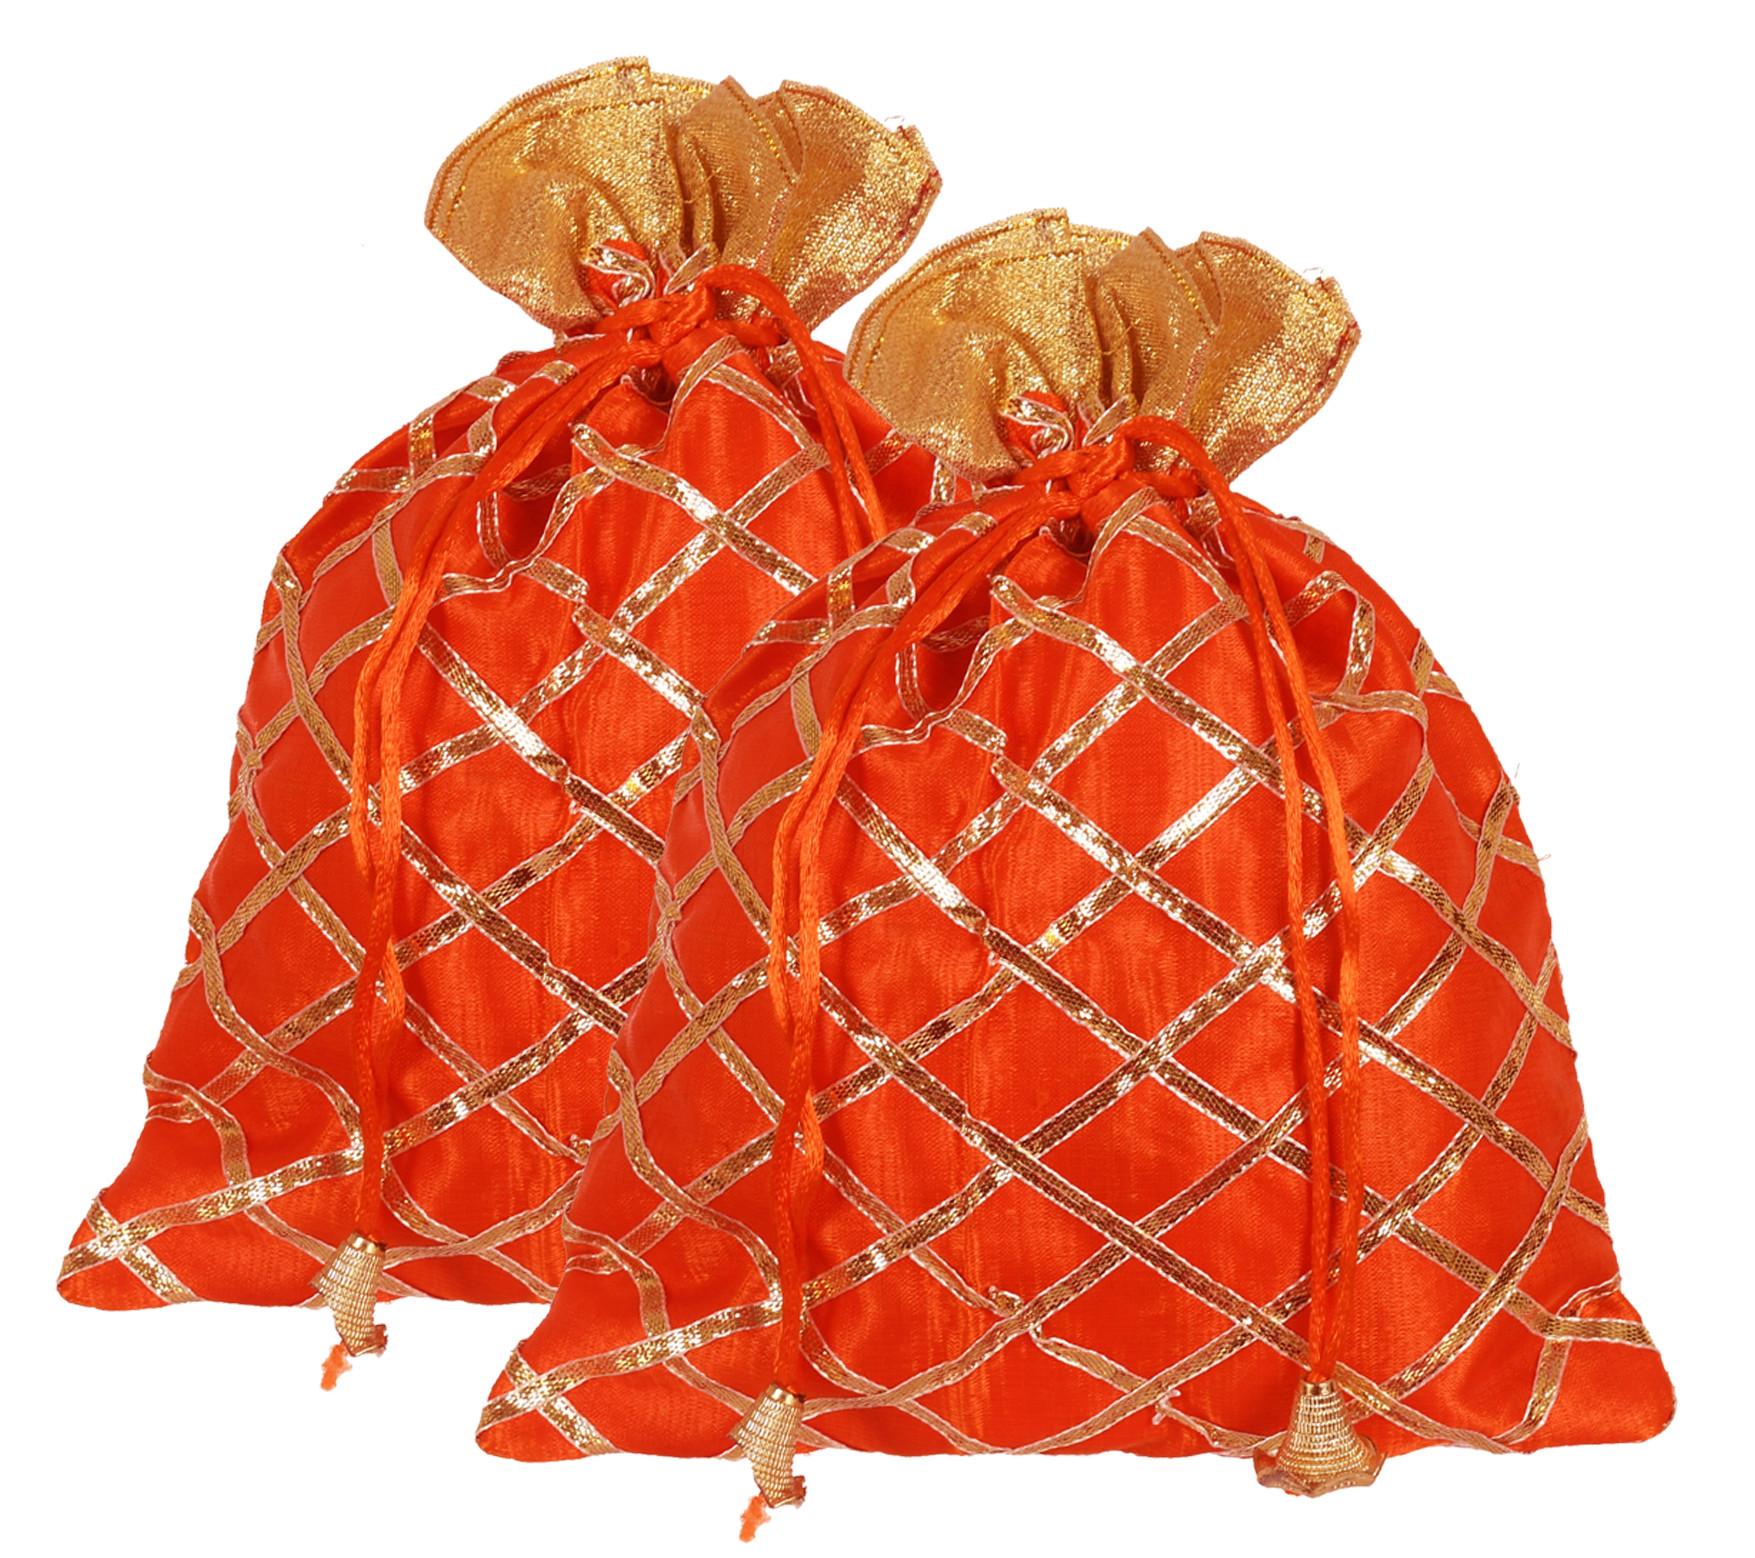 Kuber Industries Drawstring Potli Bag Party Wedding Favor Gift Jewelry Bags-(Orange)